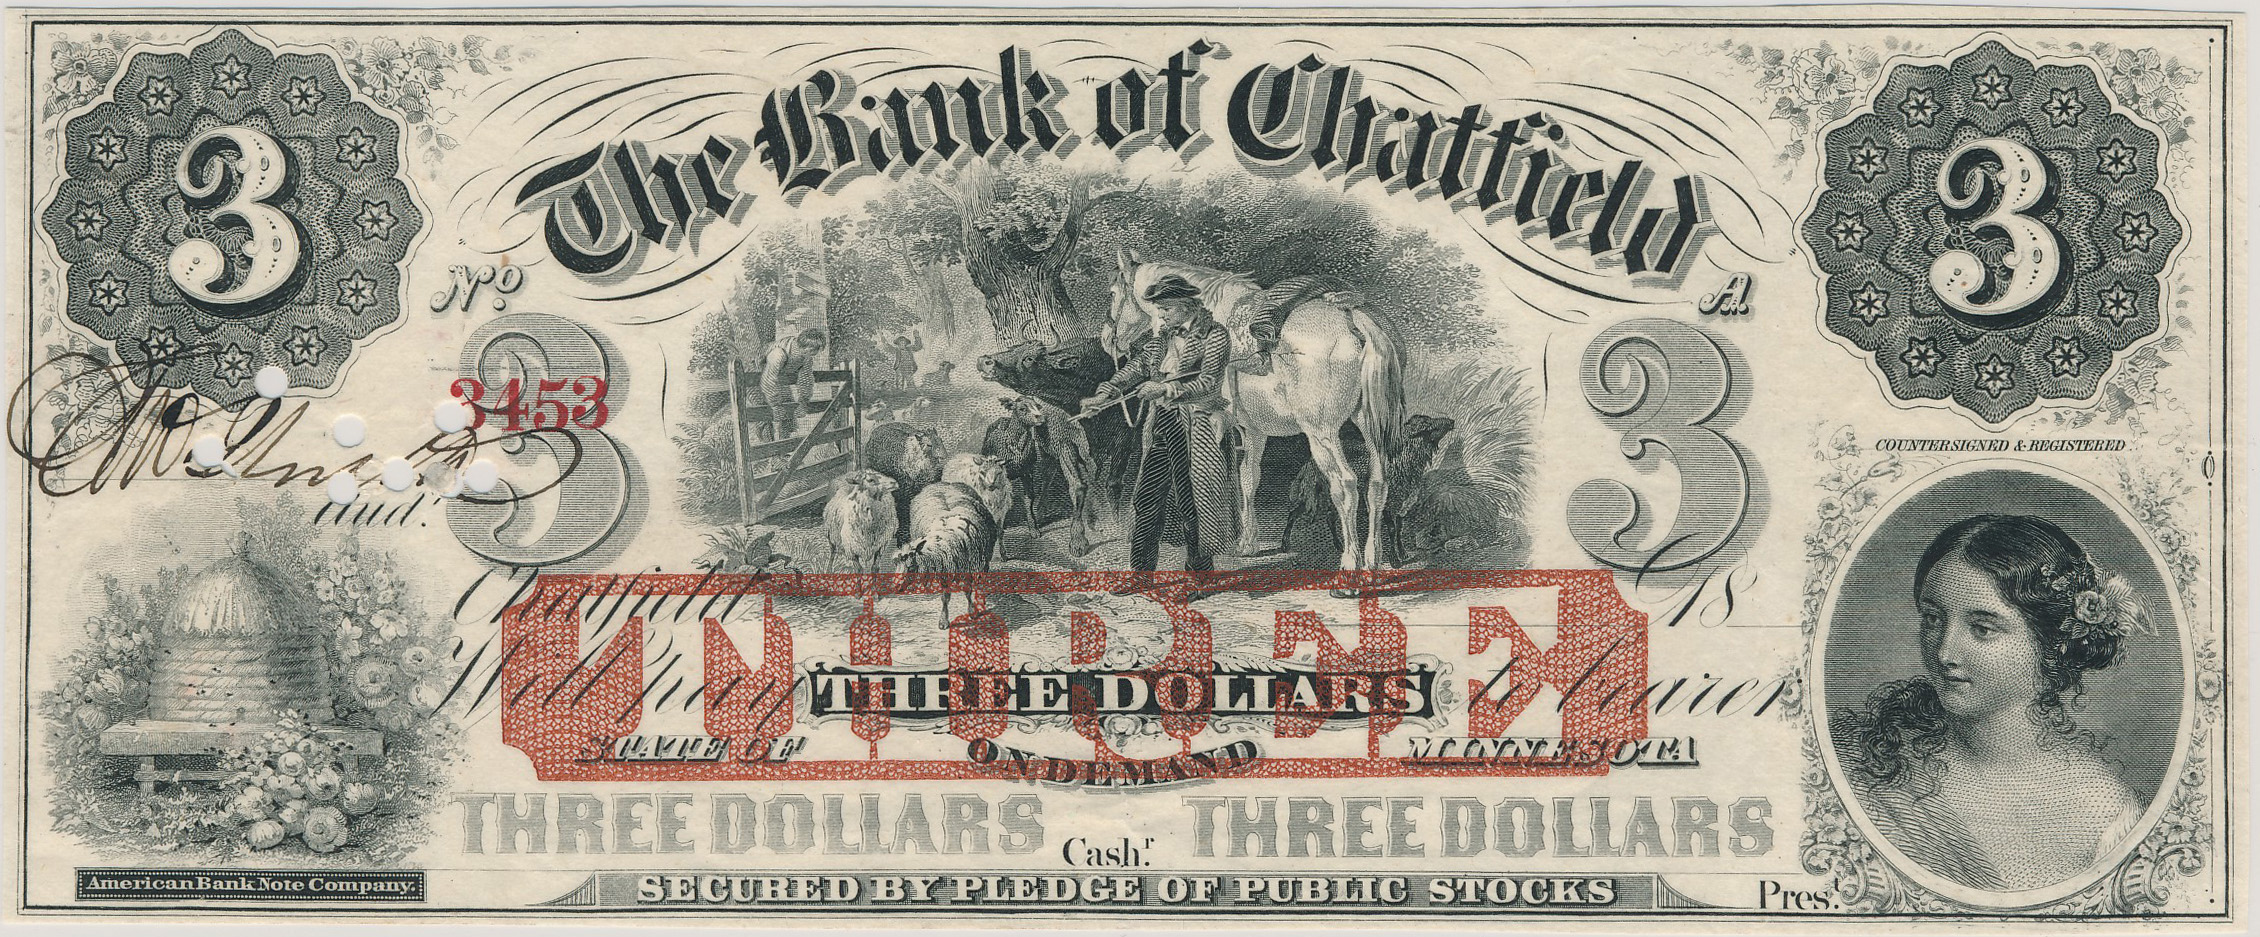 $1 Bank of Chatfield